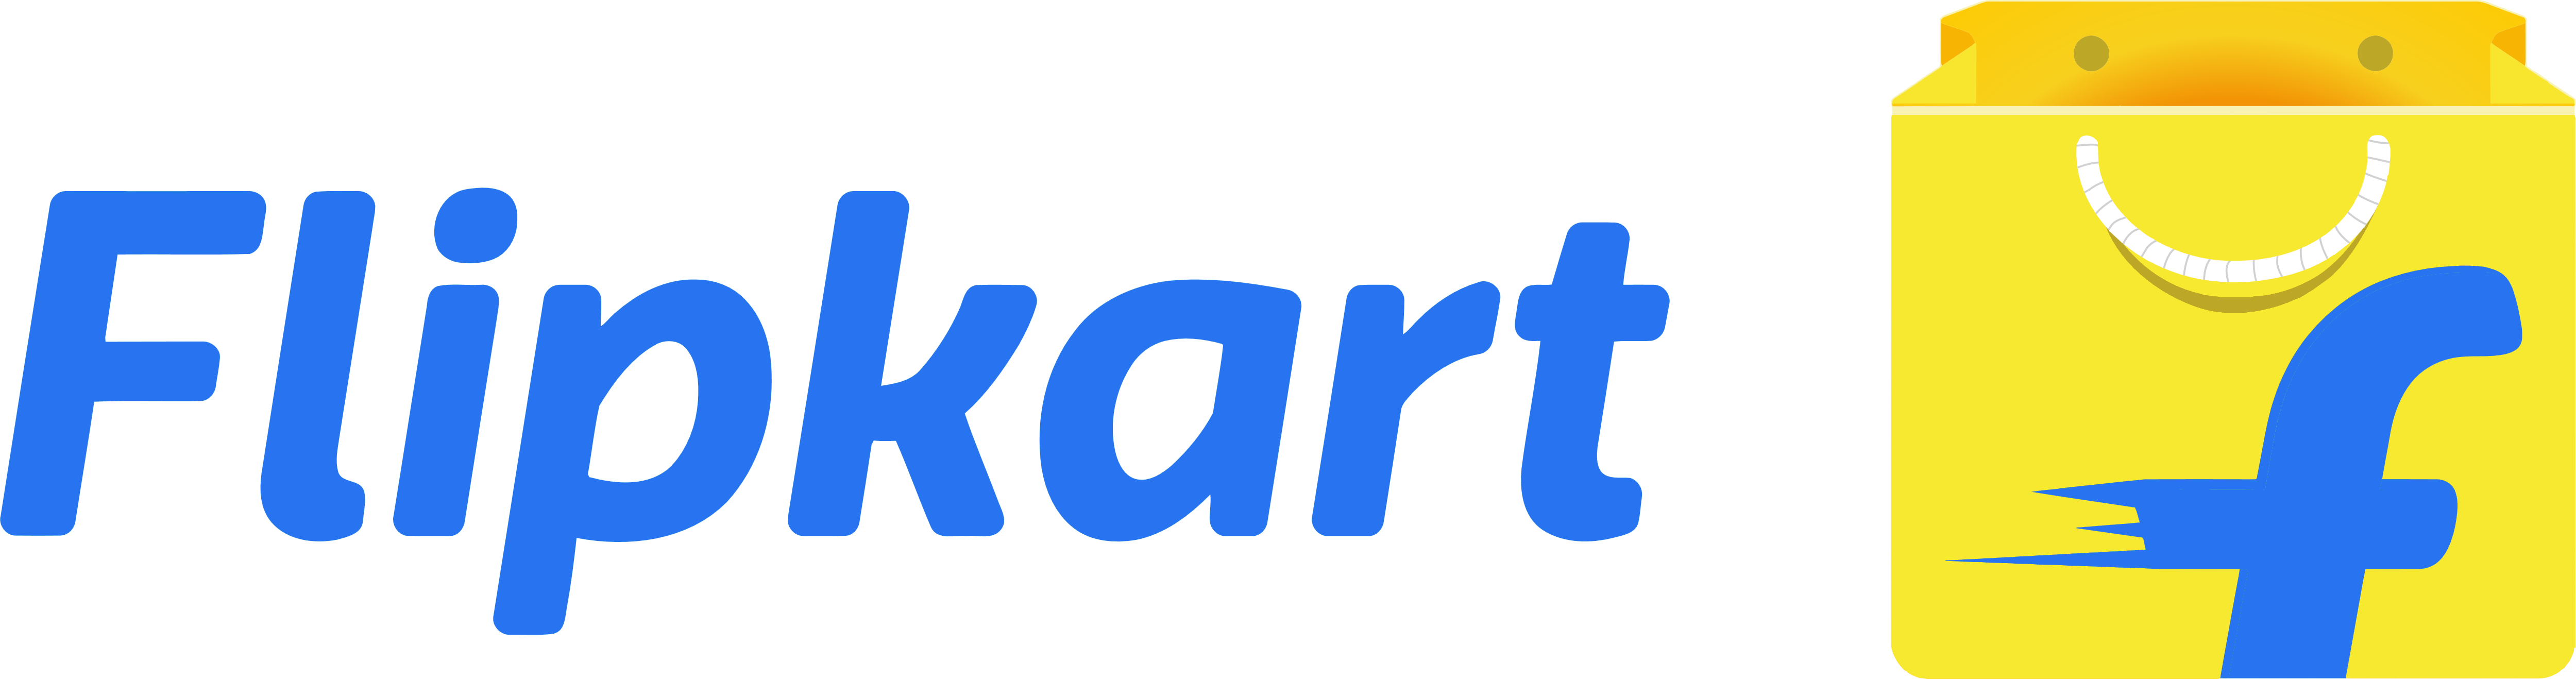 Flipkart Logo image sizes: 10